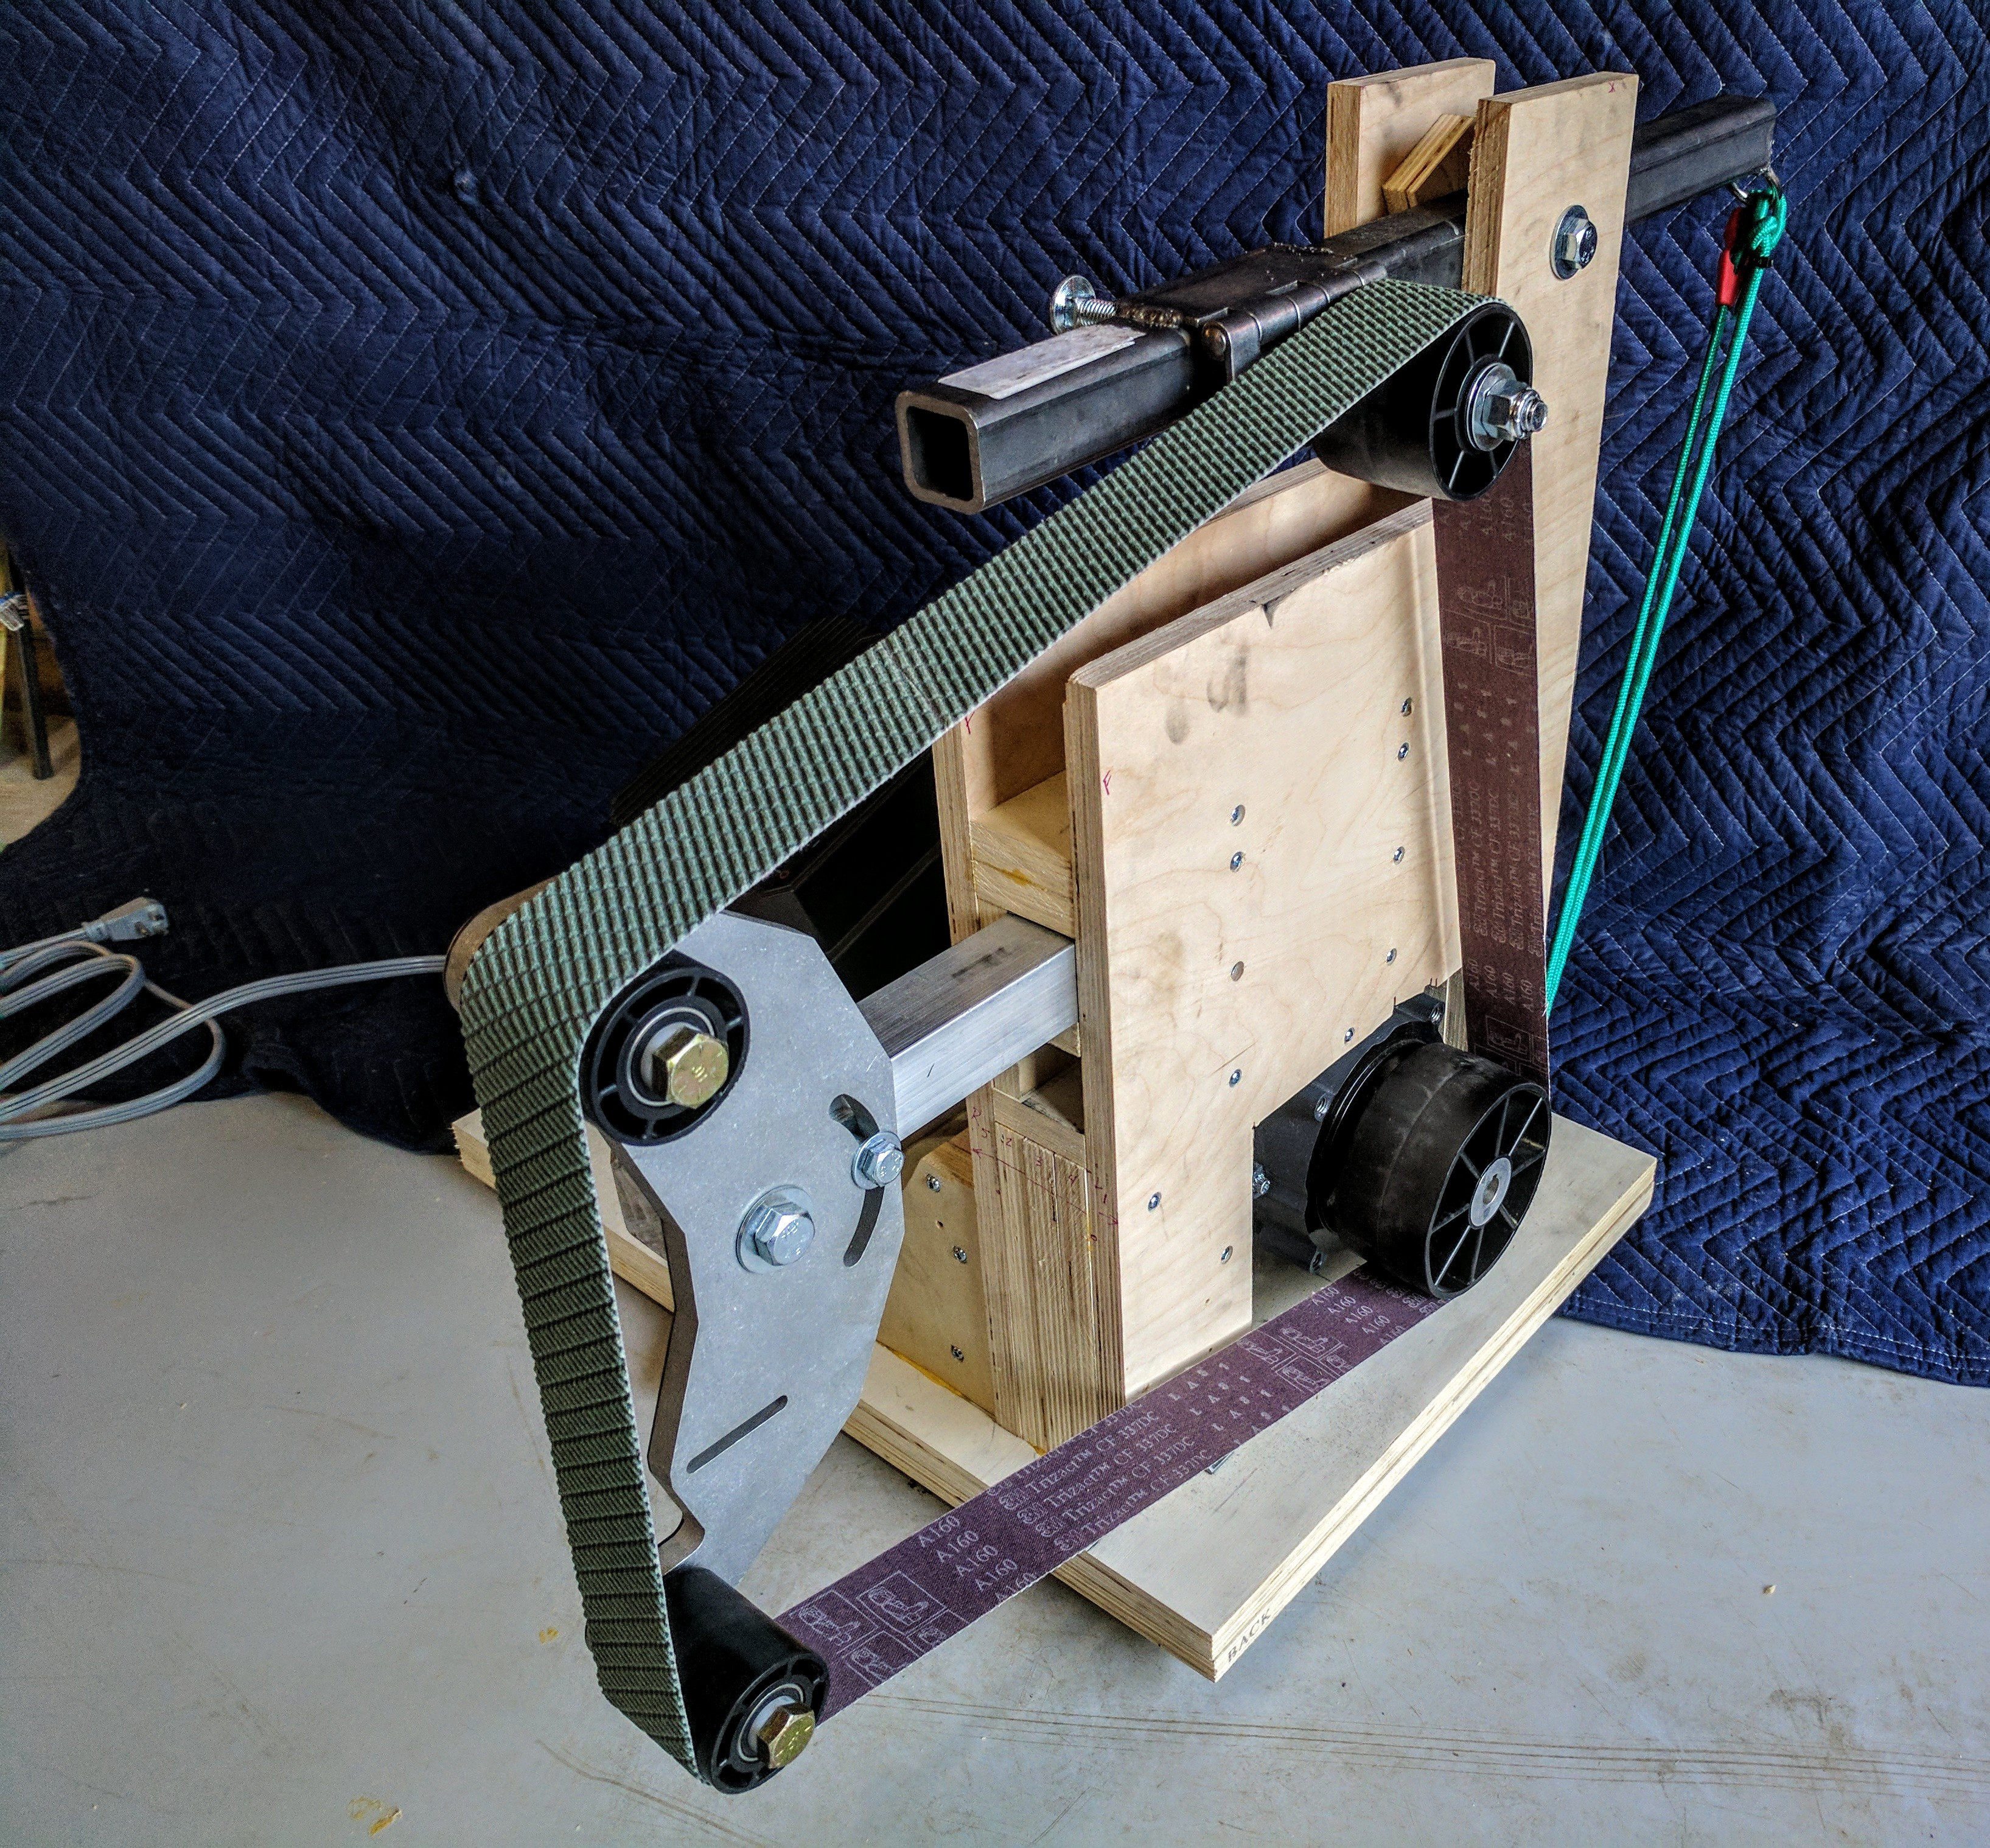 Best ideas about DIY Belt Grinder
. Save or Pin DIY 2x72 Belt Grinder plywood Grinders Sanders etc Now.